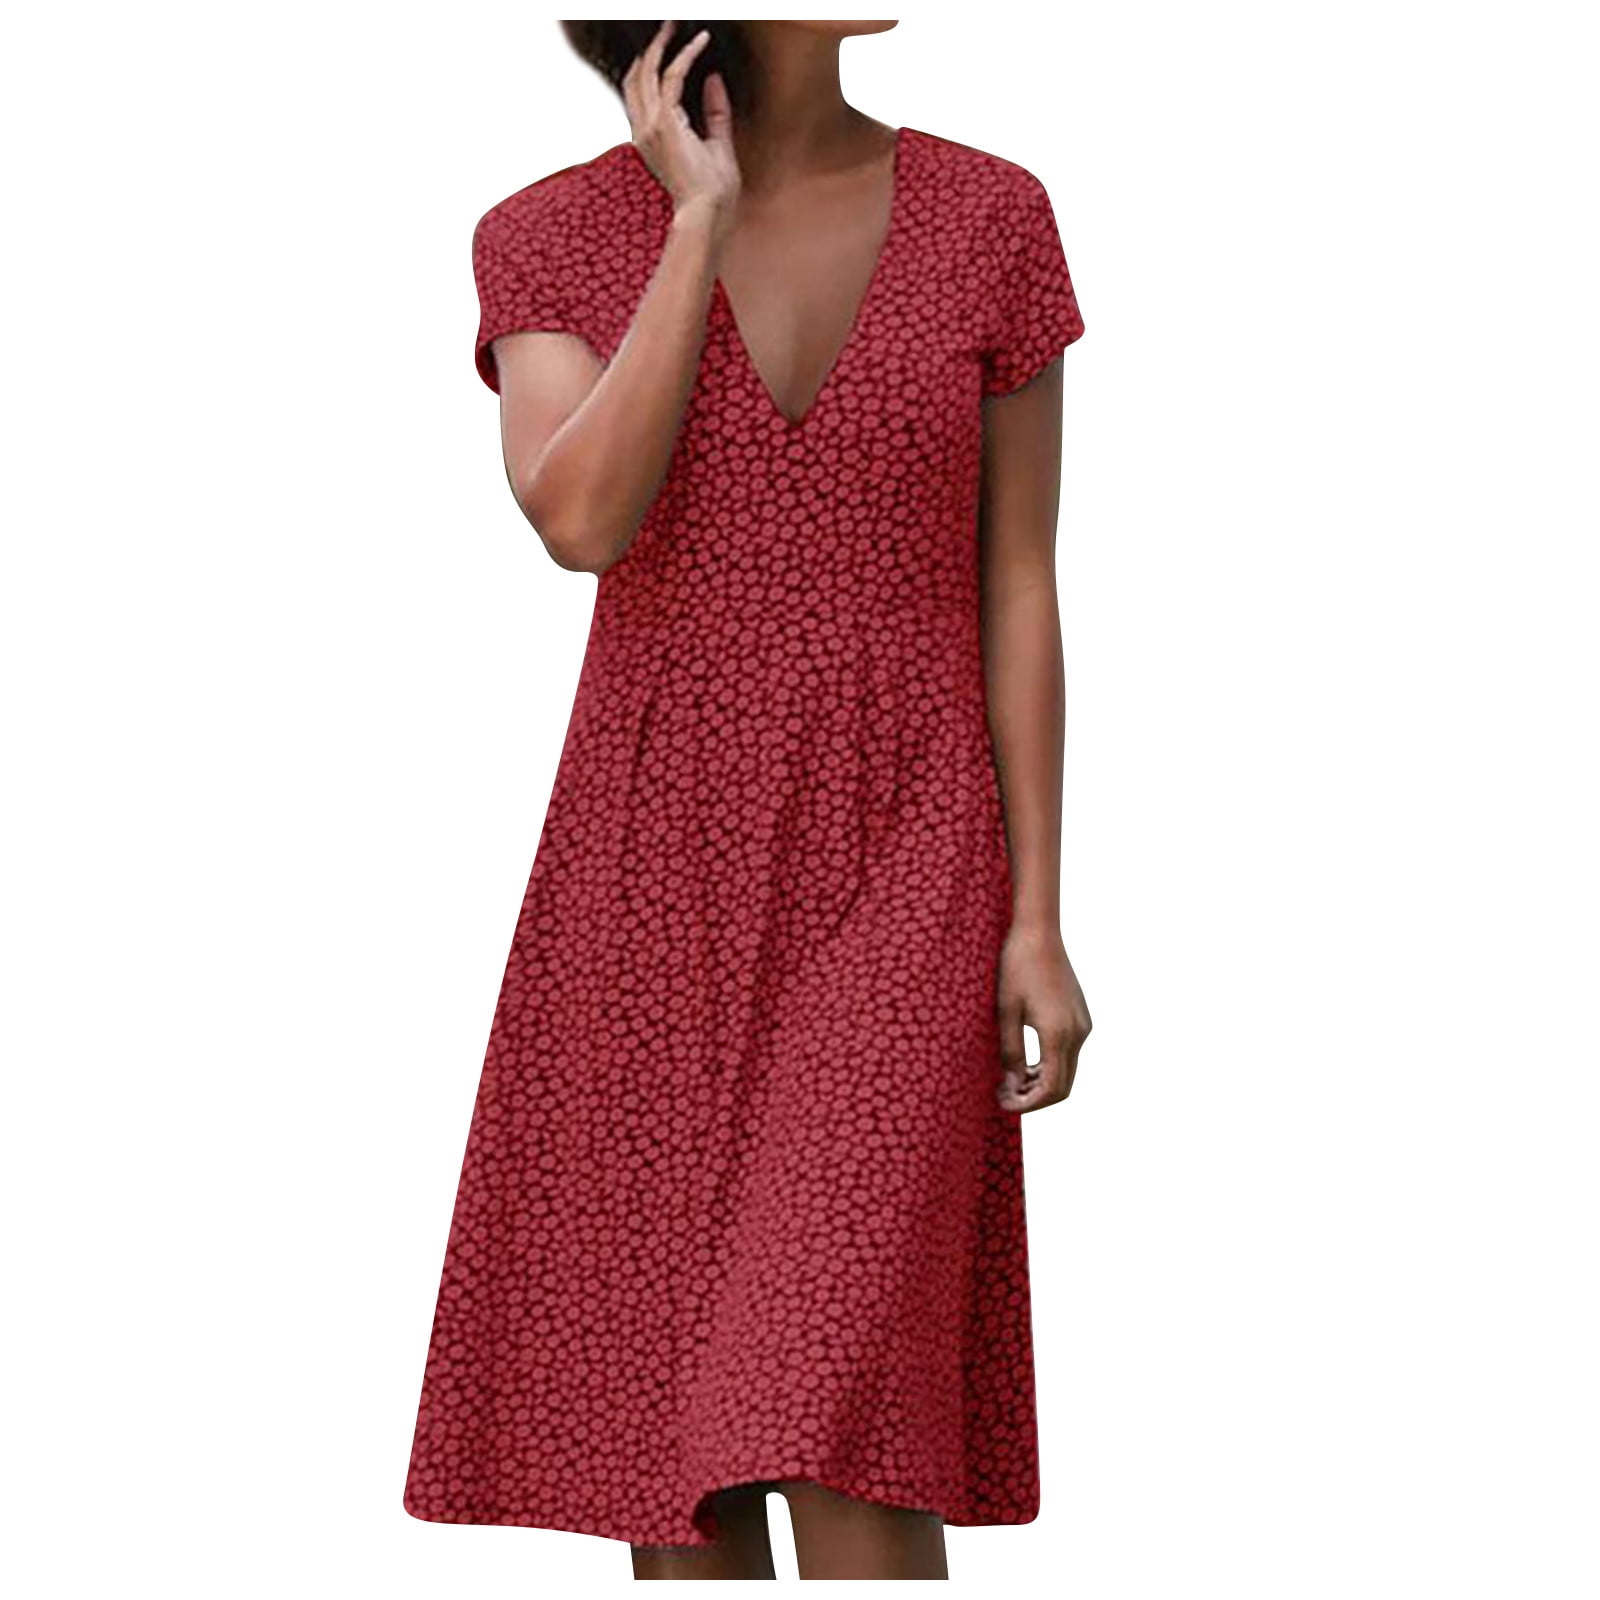 CLZOUD Summer Dress Red Cotton Women Printed Short Sleeve Round Neck Dress Casual Polka Dot Midi Dress Xxl - Walmart.com